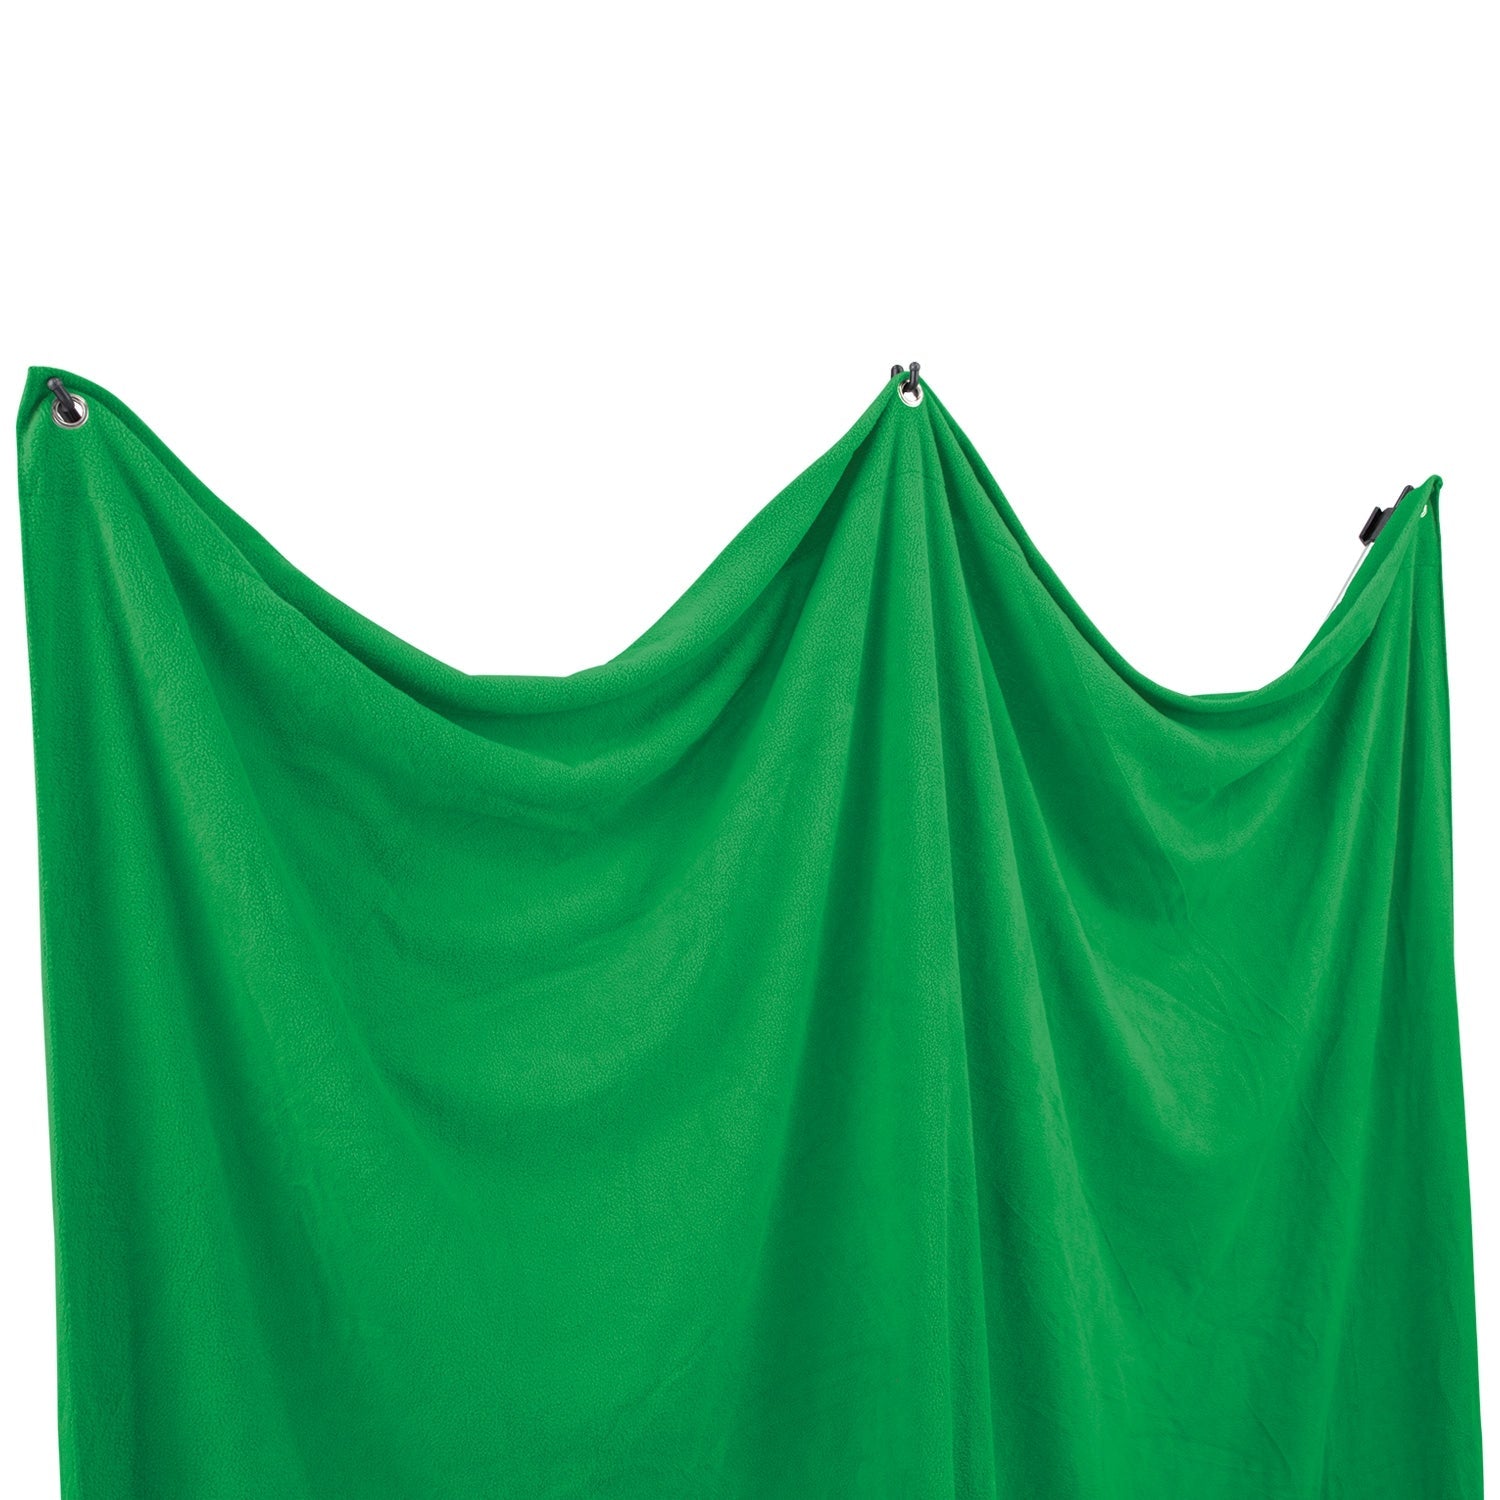 X-Drop Pro Wrinkle-Resistant Sweep Backdrop Kit - Chroma-Key Green Screen (8' x 13')